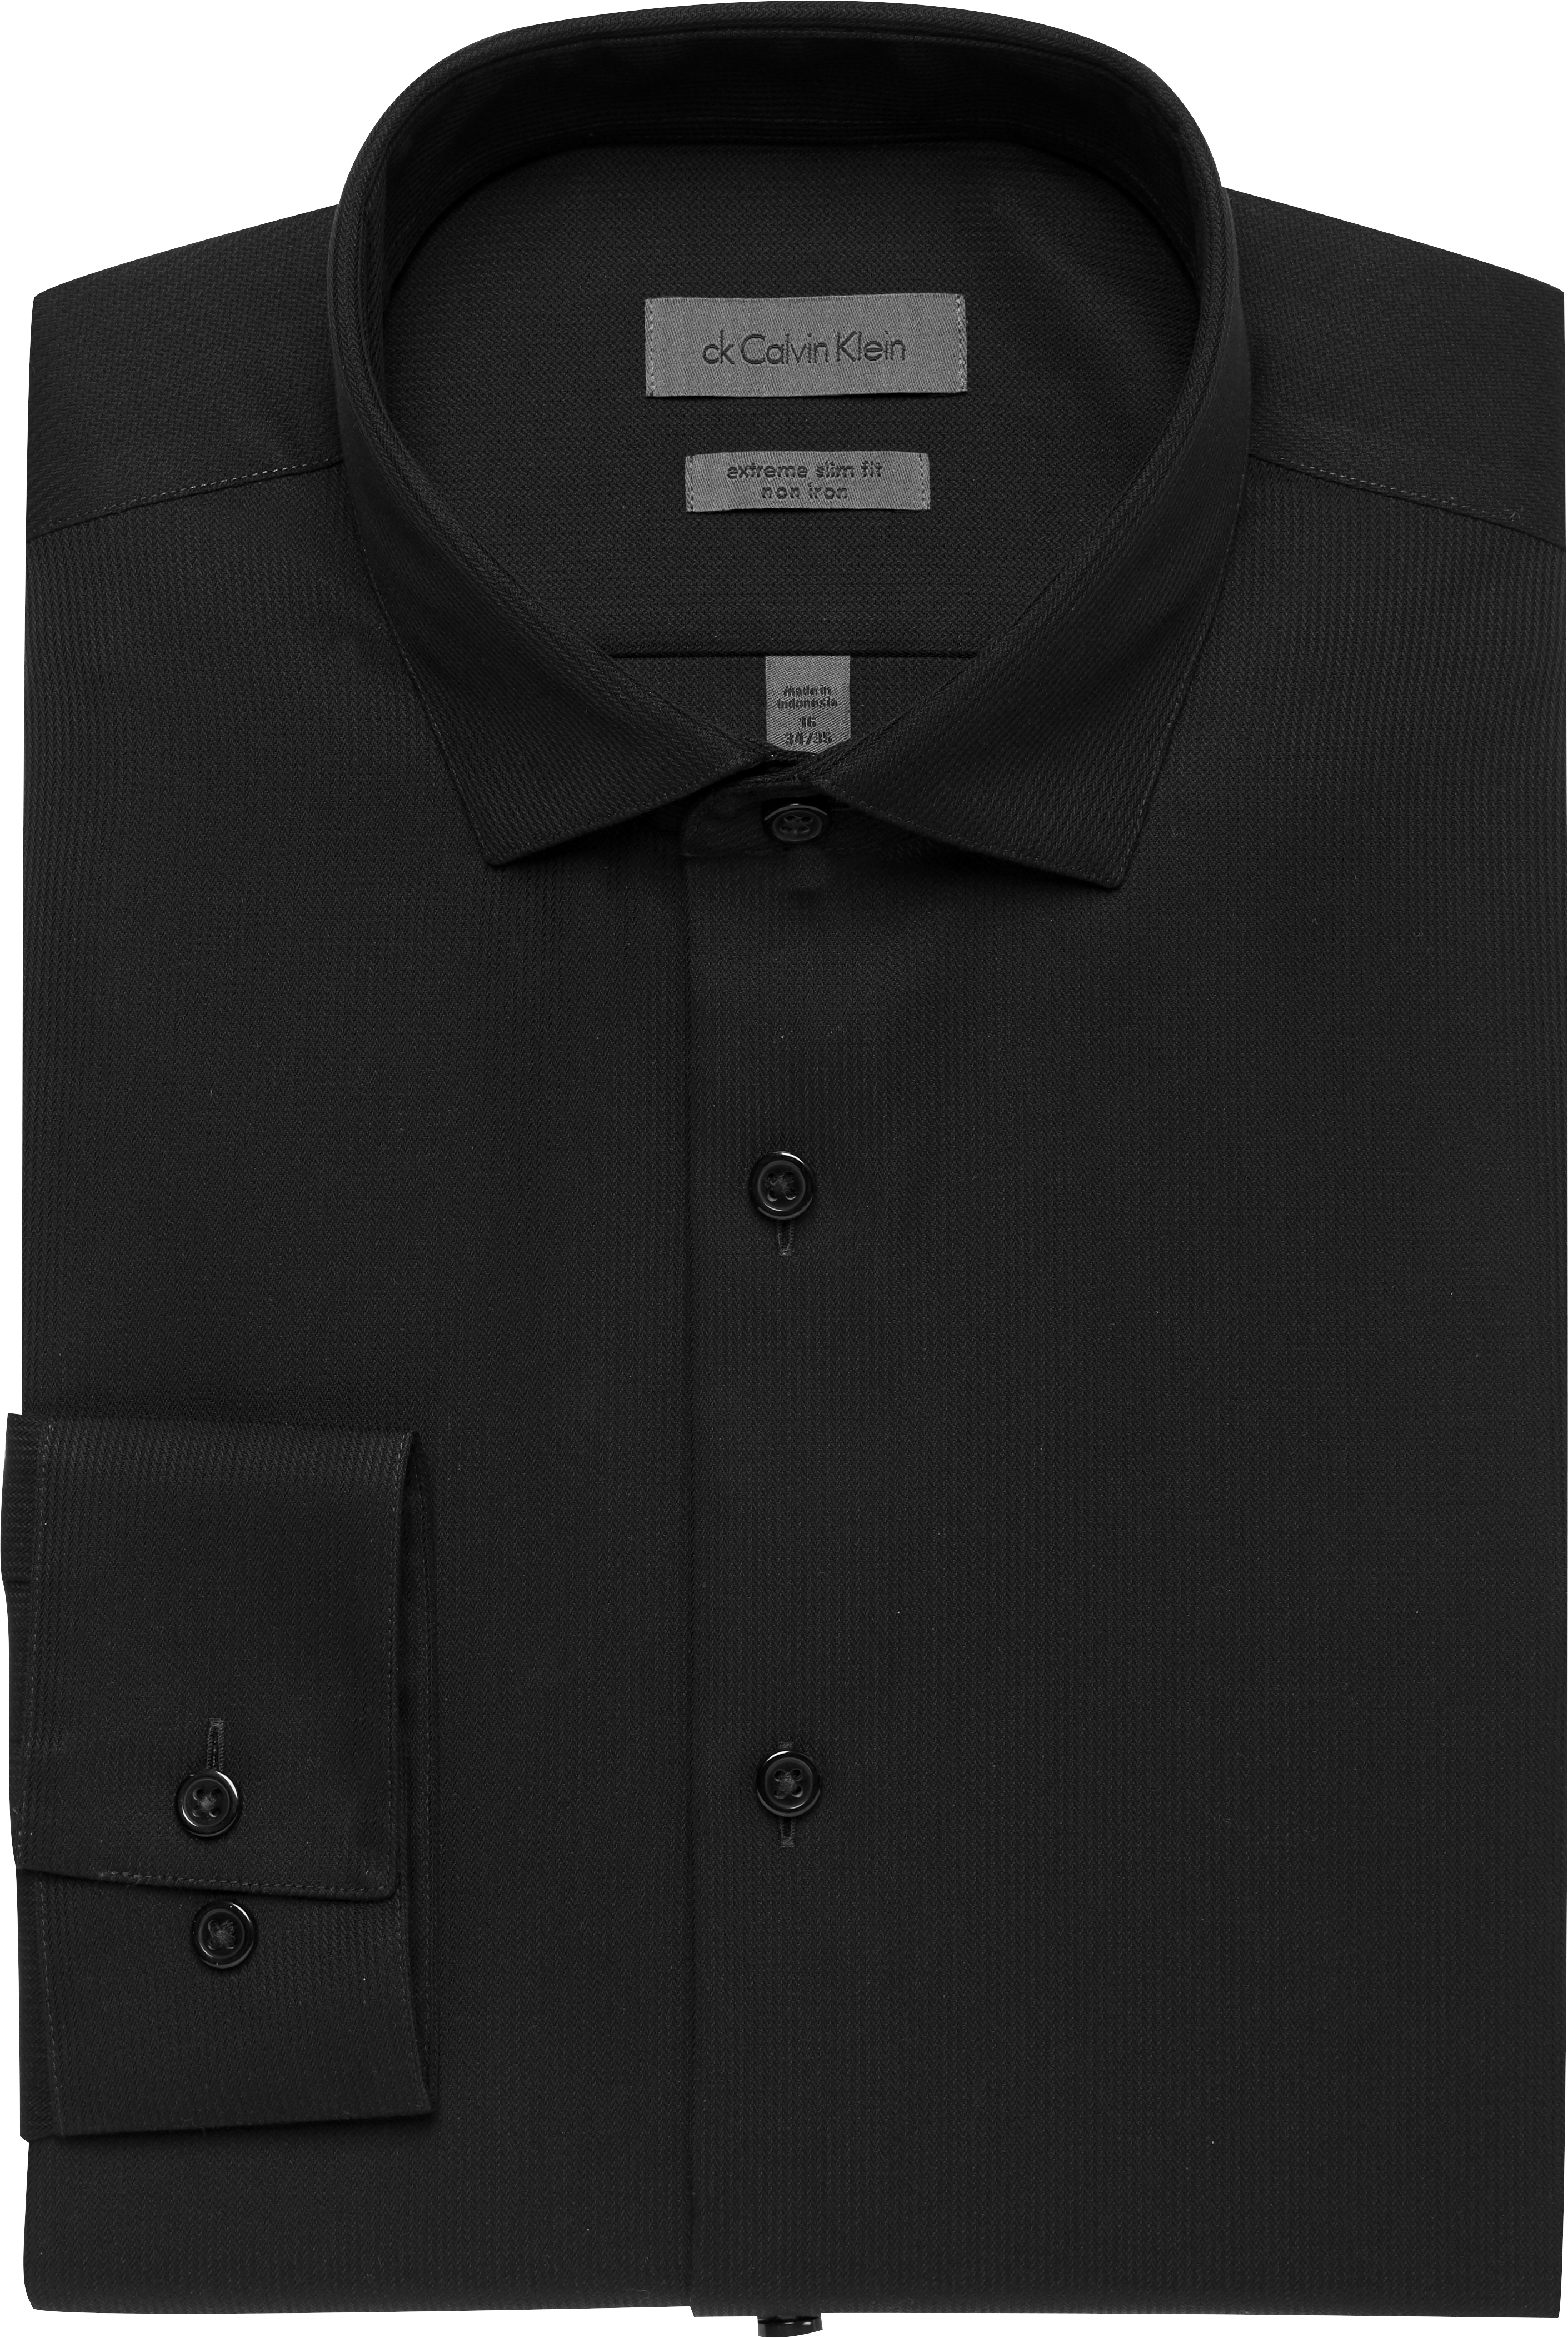 Mens Black Dress Shirt | Men's Wearhouse